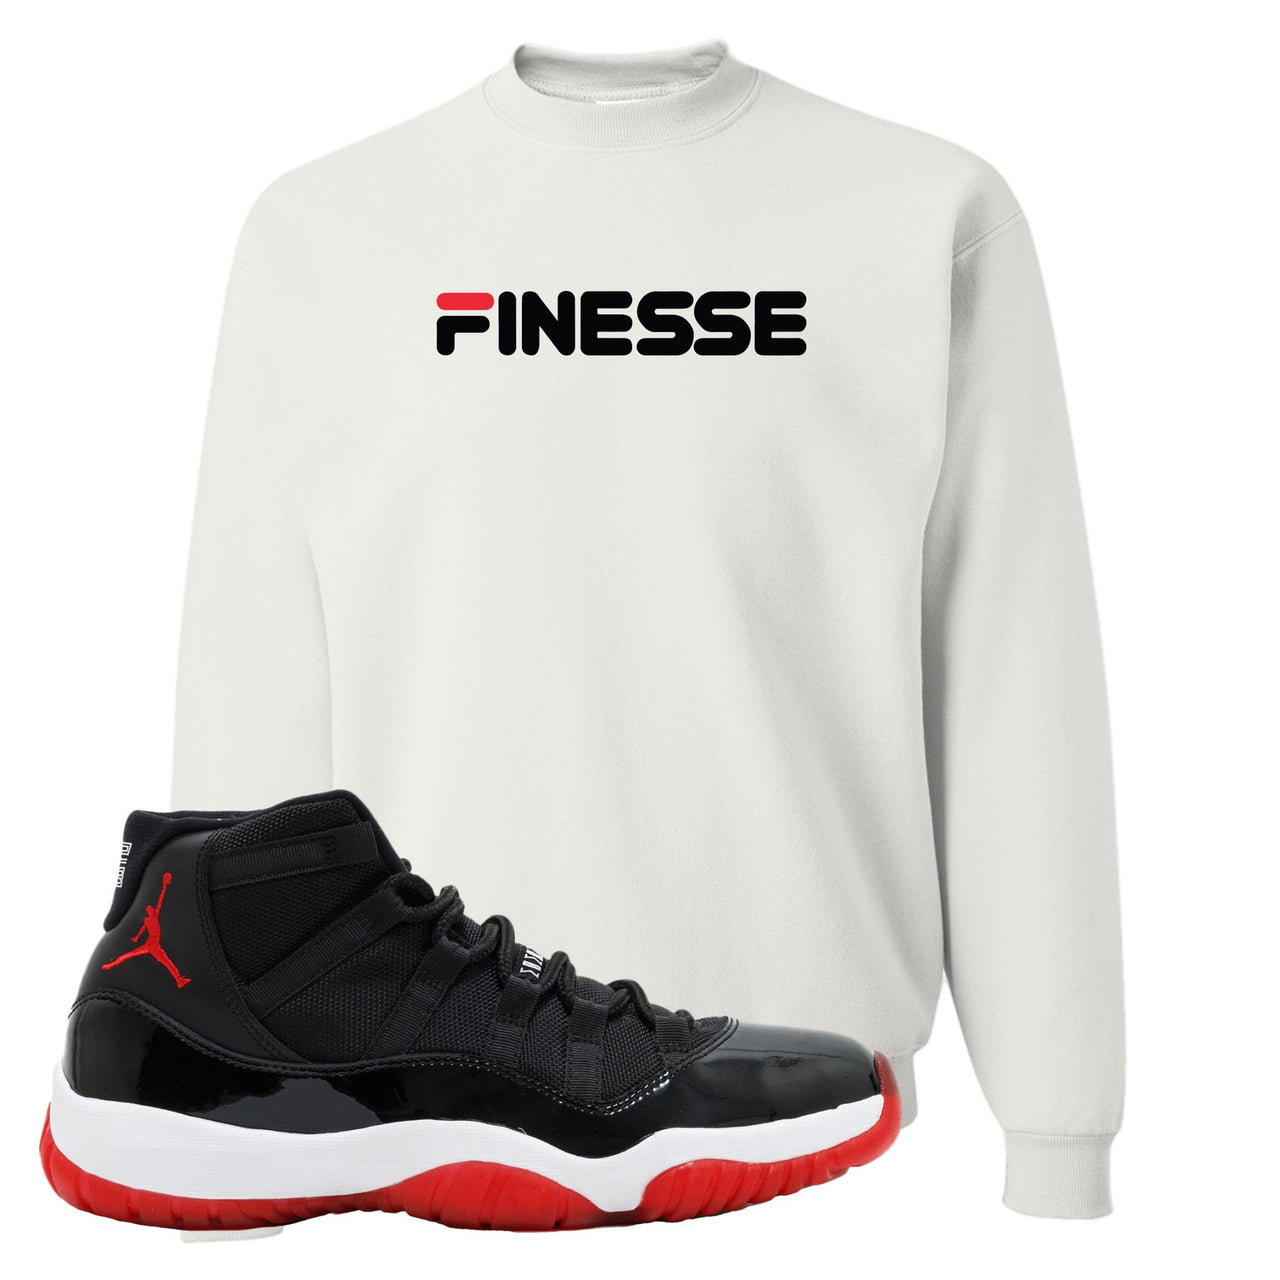 Jordan 11 Bred Finesse White Sneaker Hook Up Crewneck Sweatshirt